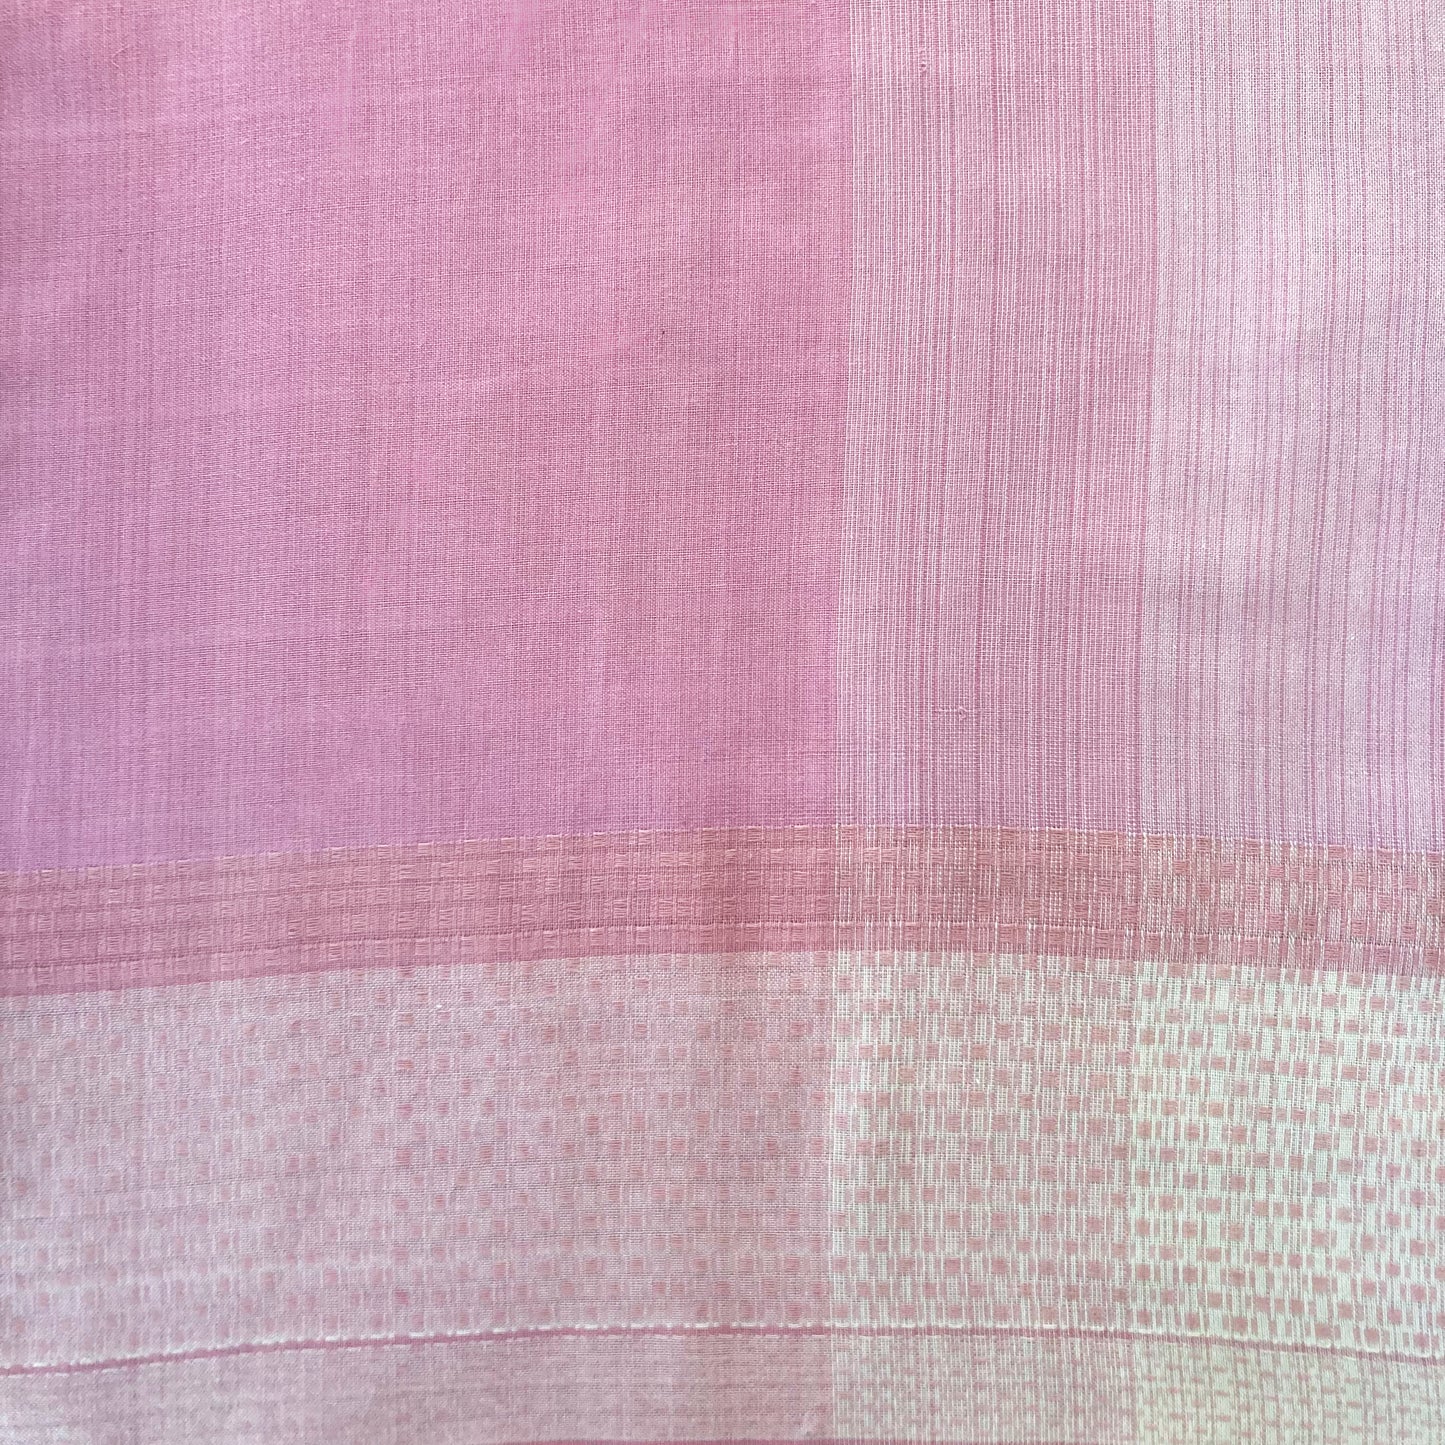 Handwoven Peach Pink shawl - Cotton